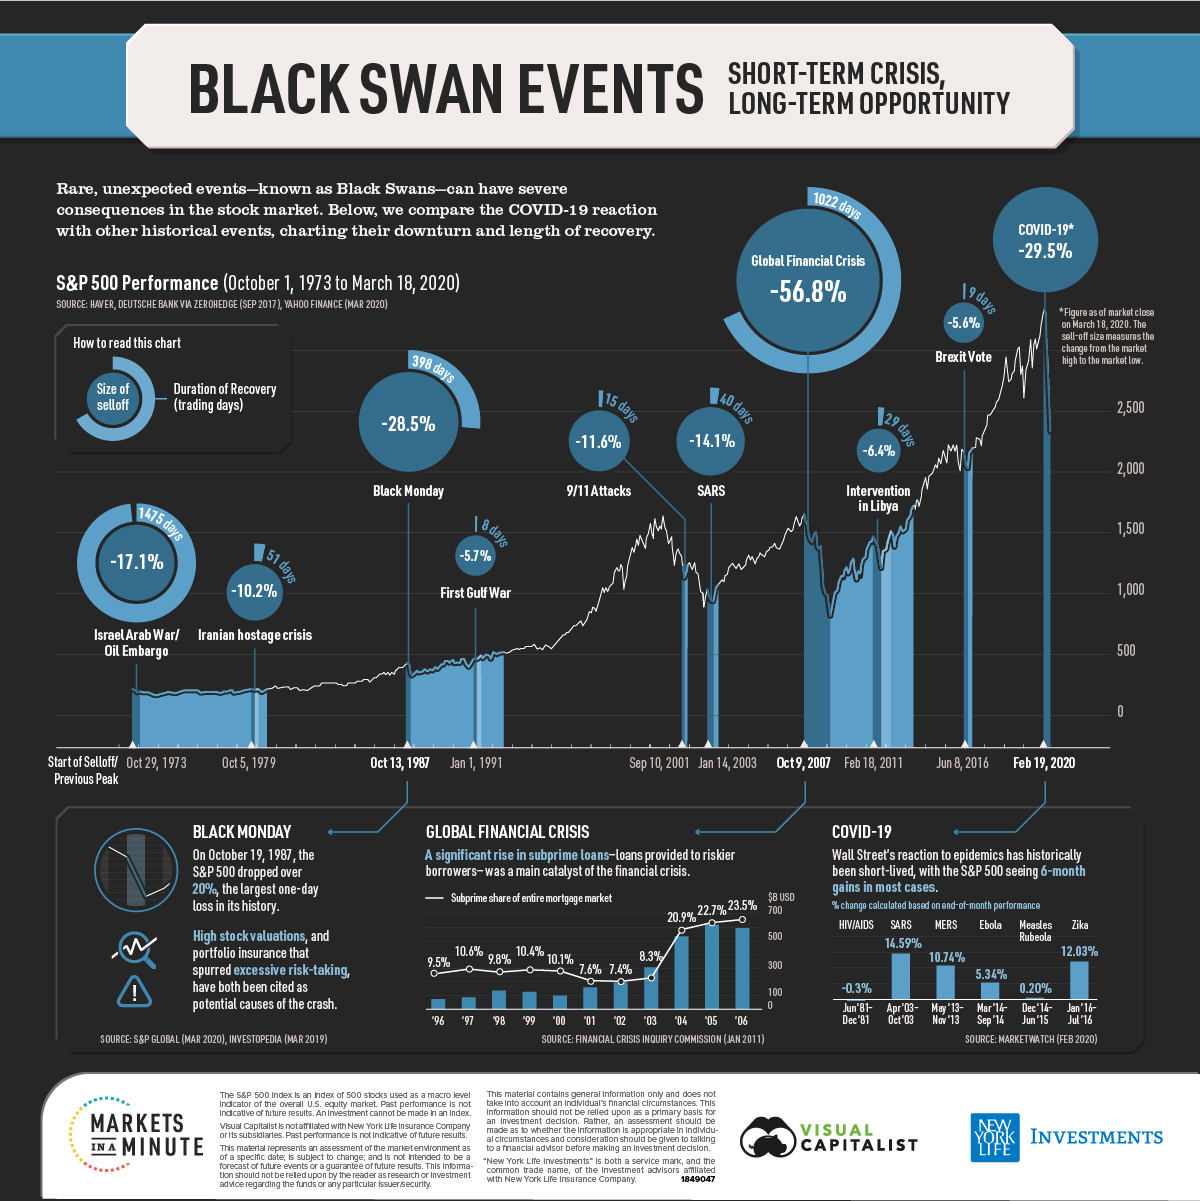 Black swan event investing 101 holotoken news